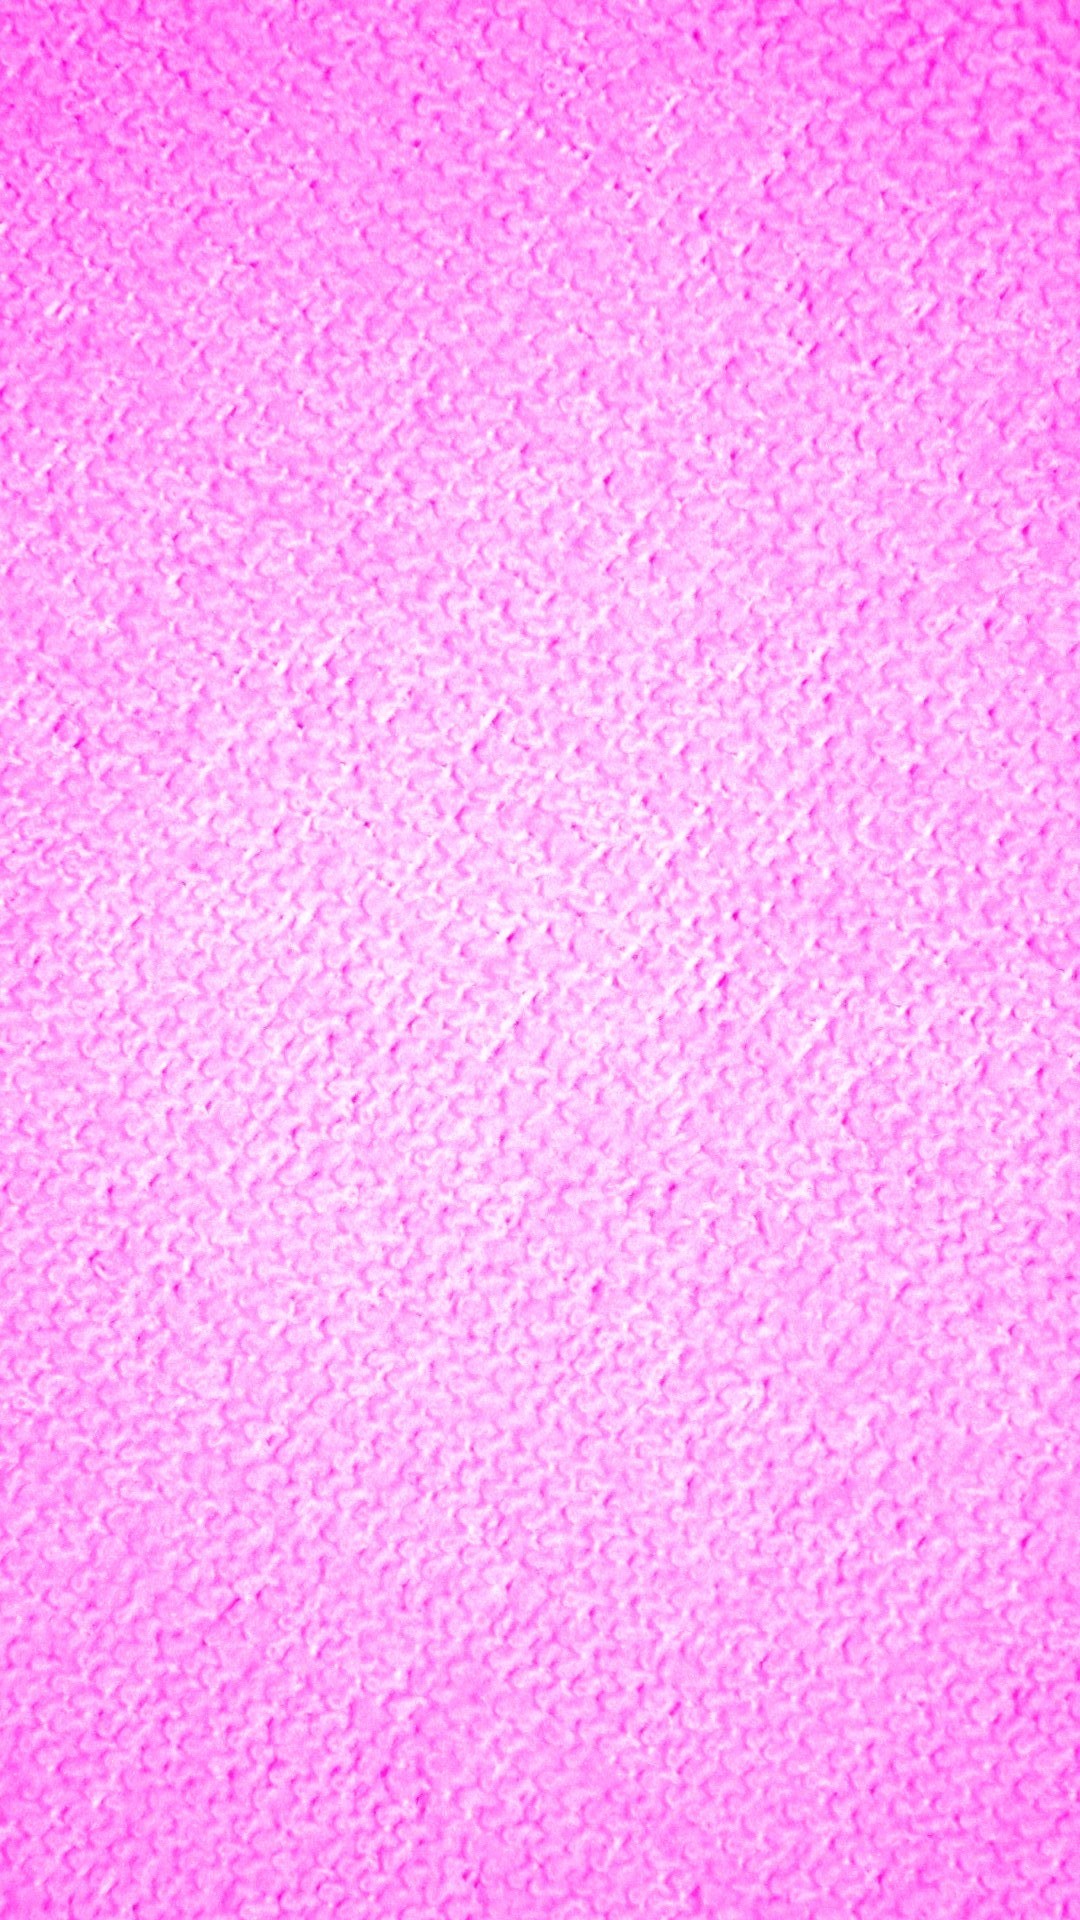 Pink Micro Fiber Cloth iPhone Wallpaper resolution 1080x1920